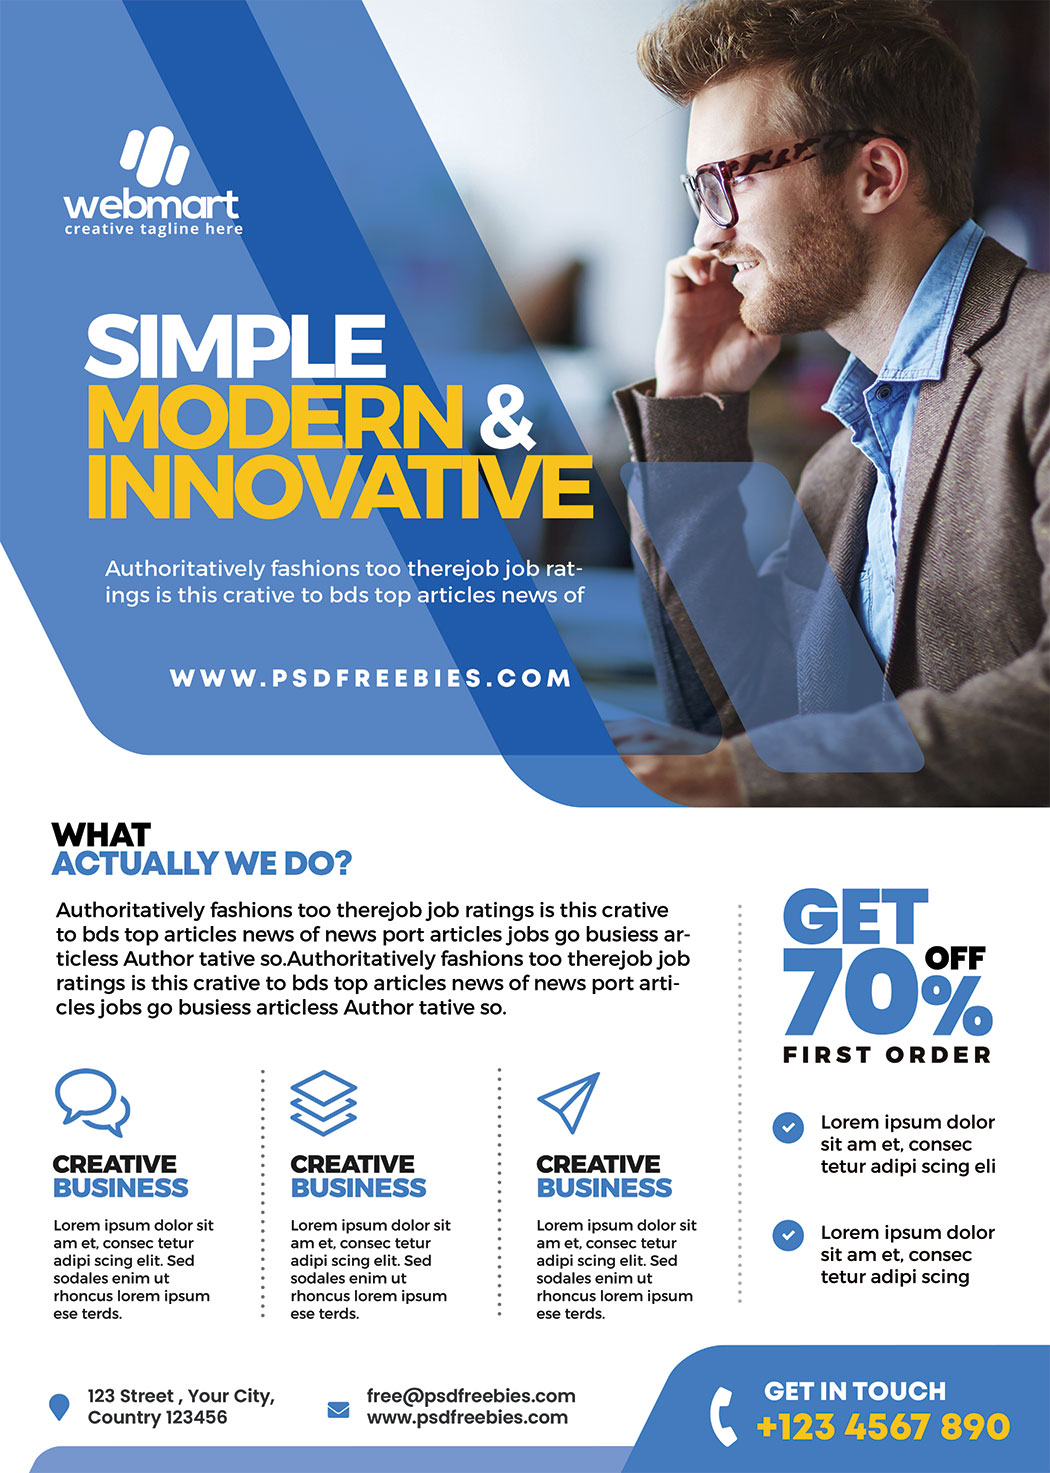 Professional Corporate Flyer Design PSD – PSDFreebies.com